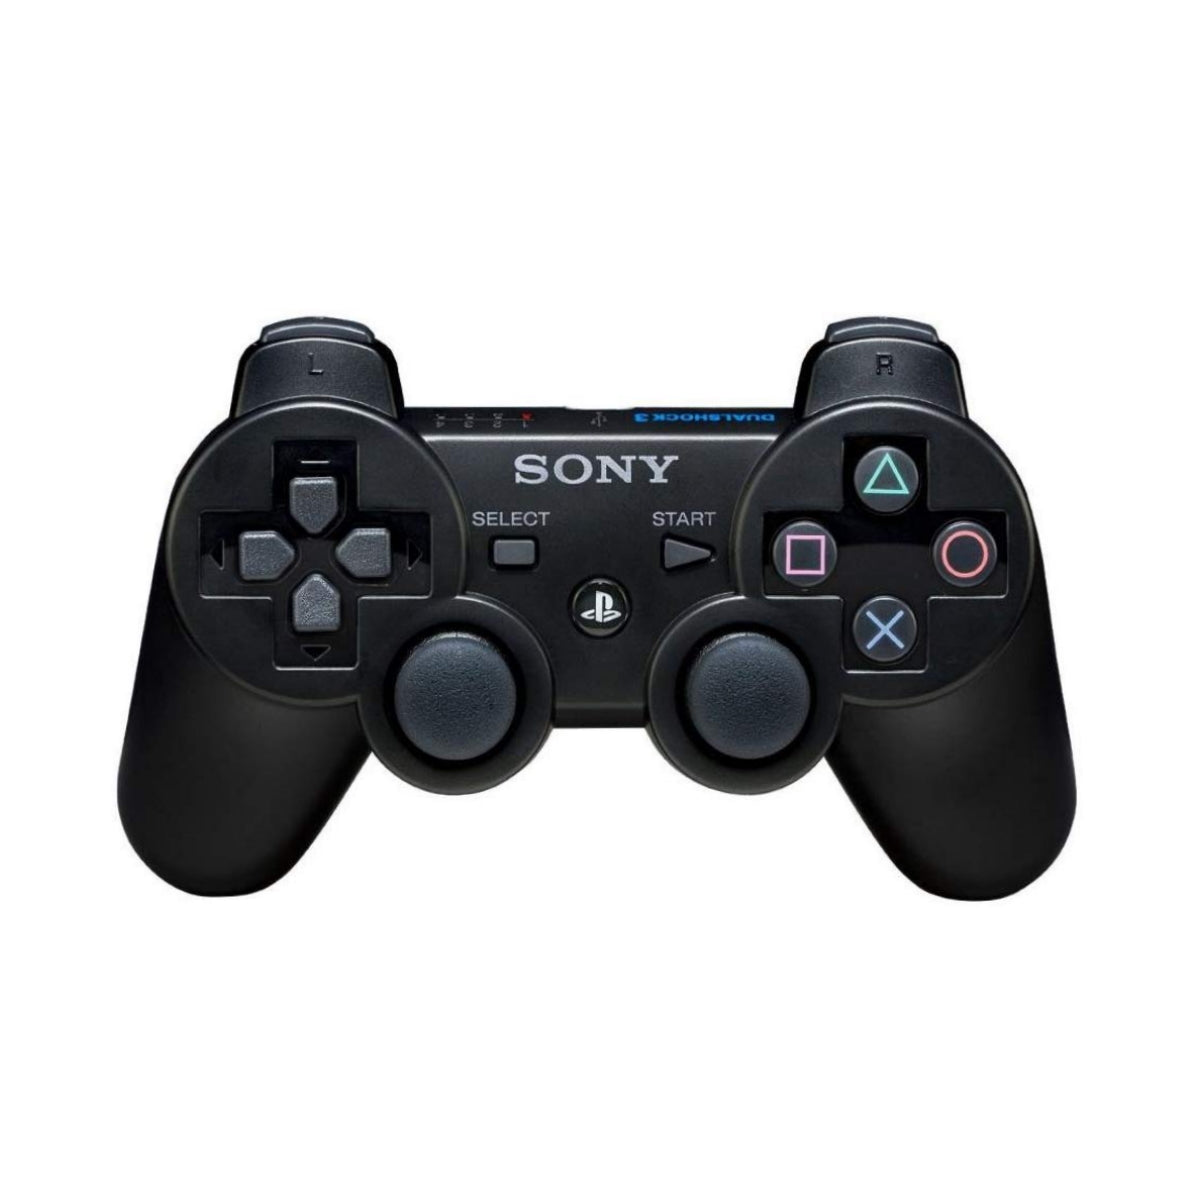 Sony PlayStation 3 (PS3) DualShock 3 Analog Controller - Black